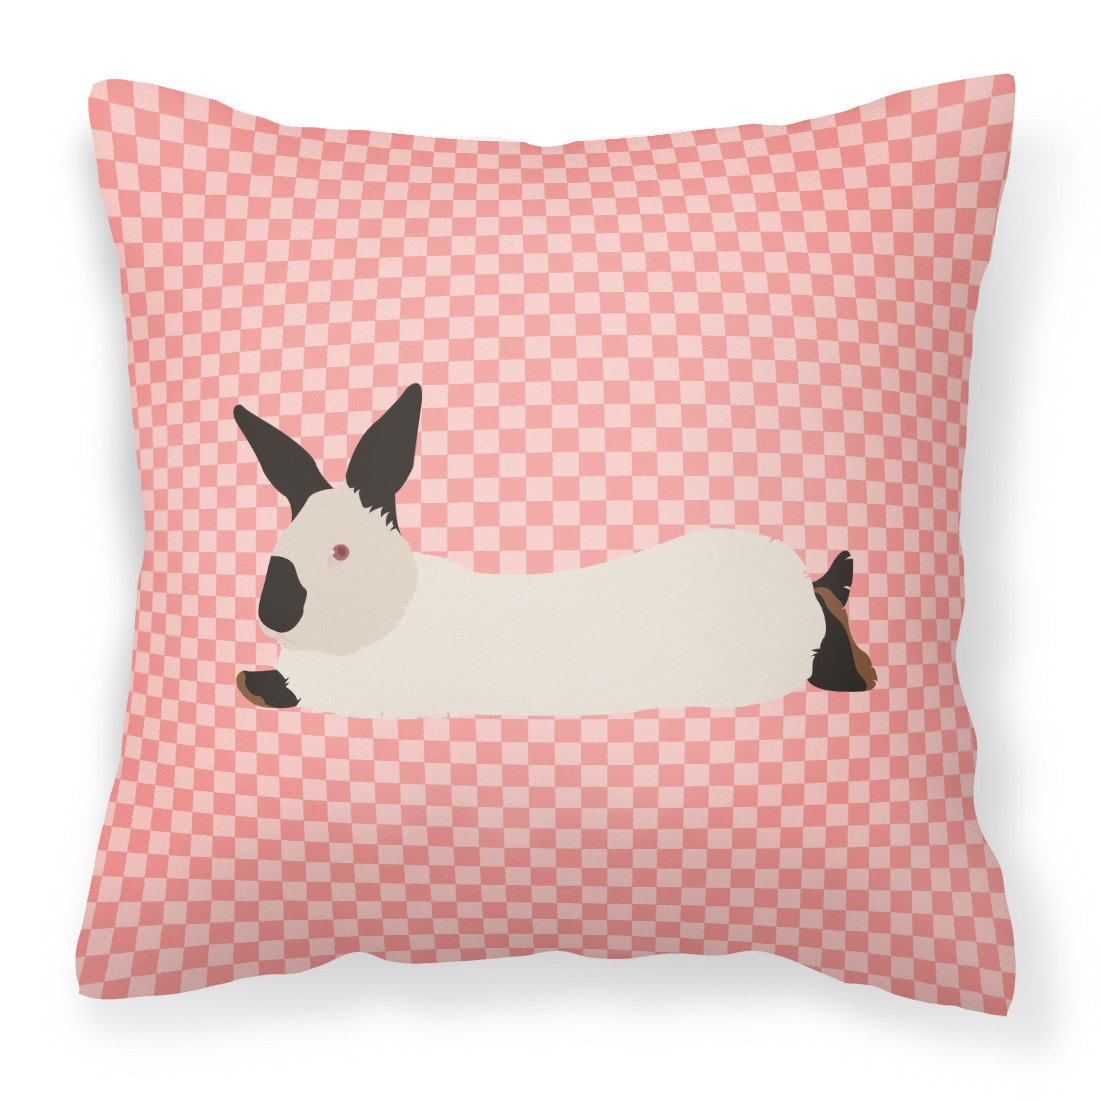 California White Rabbit Pink Check Fabric Decorative Pillow BB7967PW1818 by Caroline's Treasures